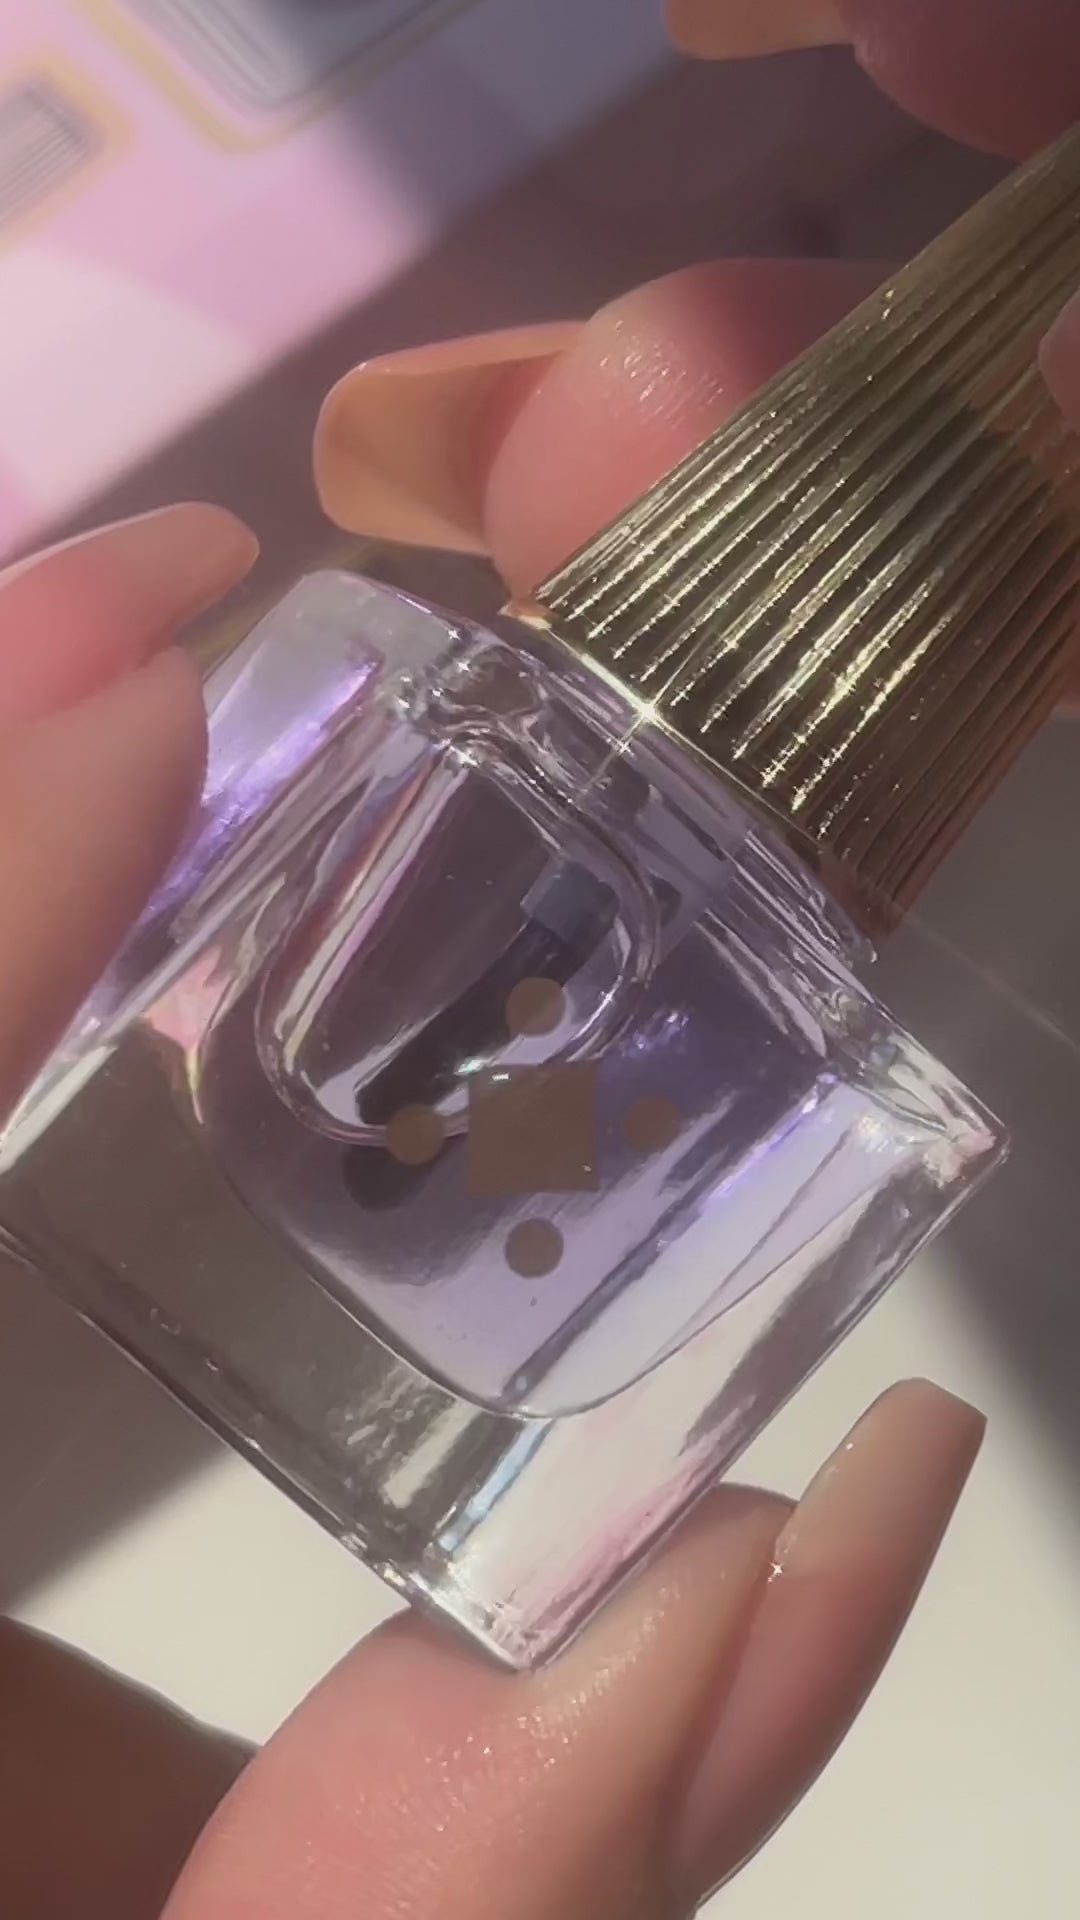 Lavender Cuticle Oil Video